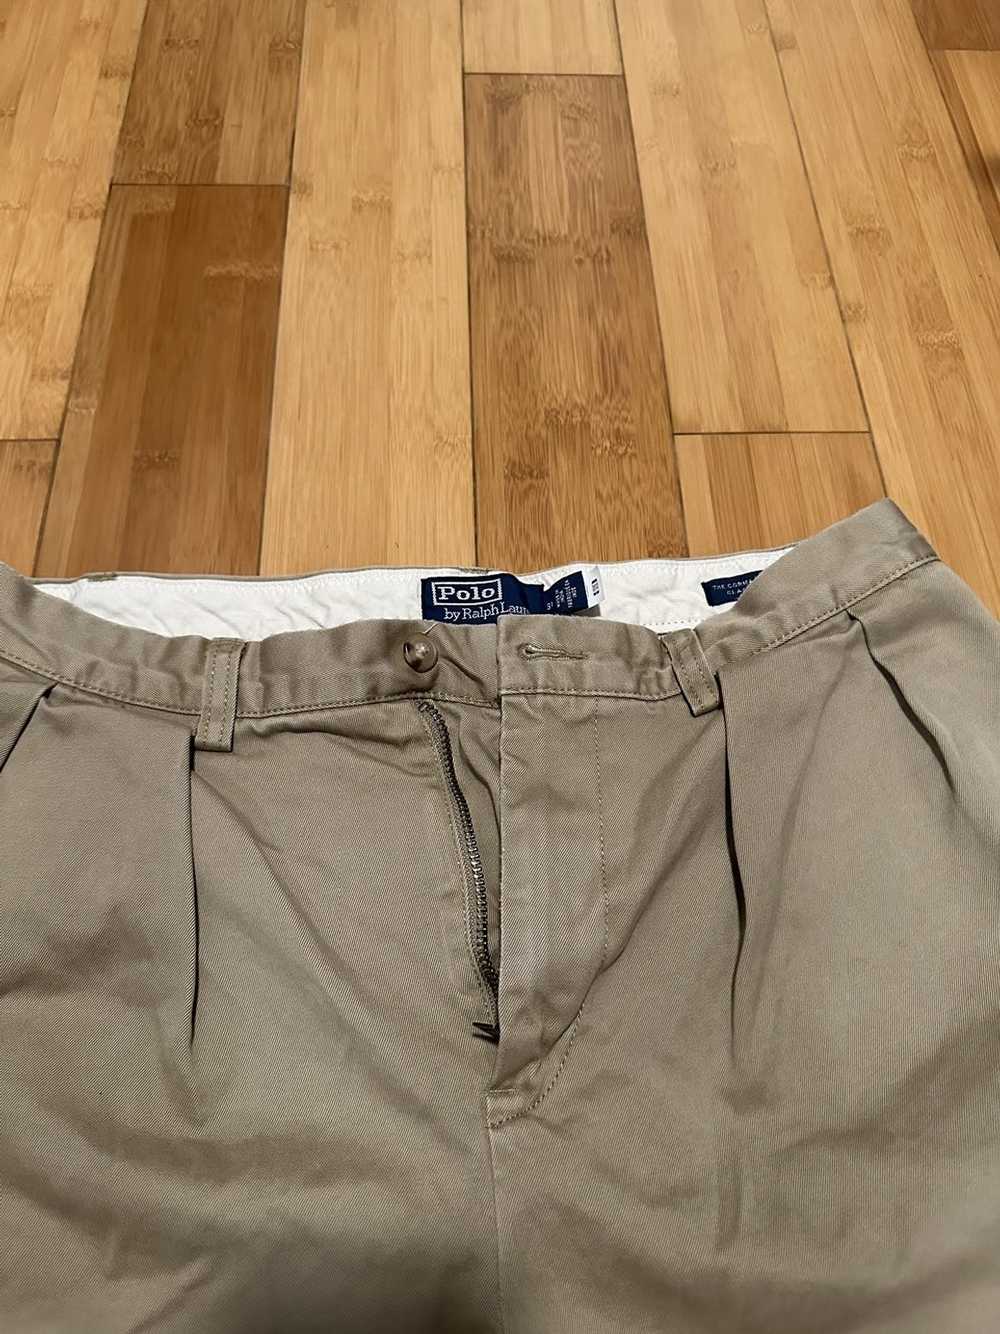 Polo Ralph Lauren Pleated Khaki Shorts - image 2